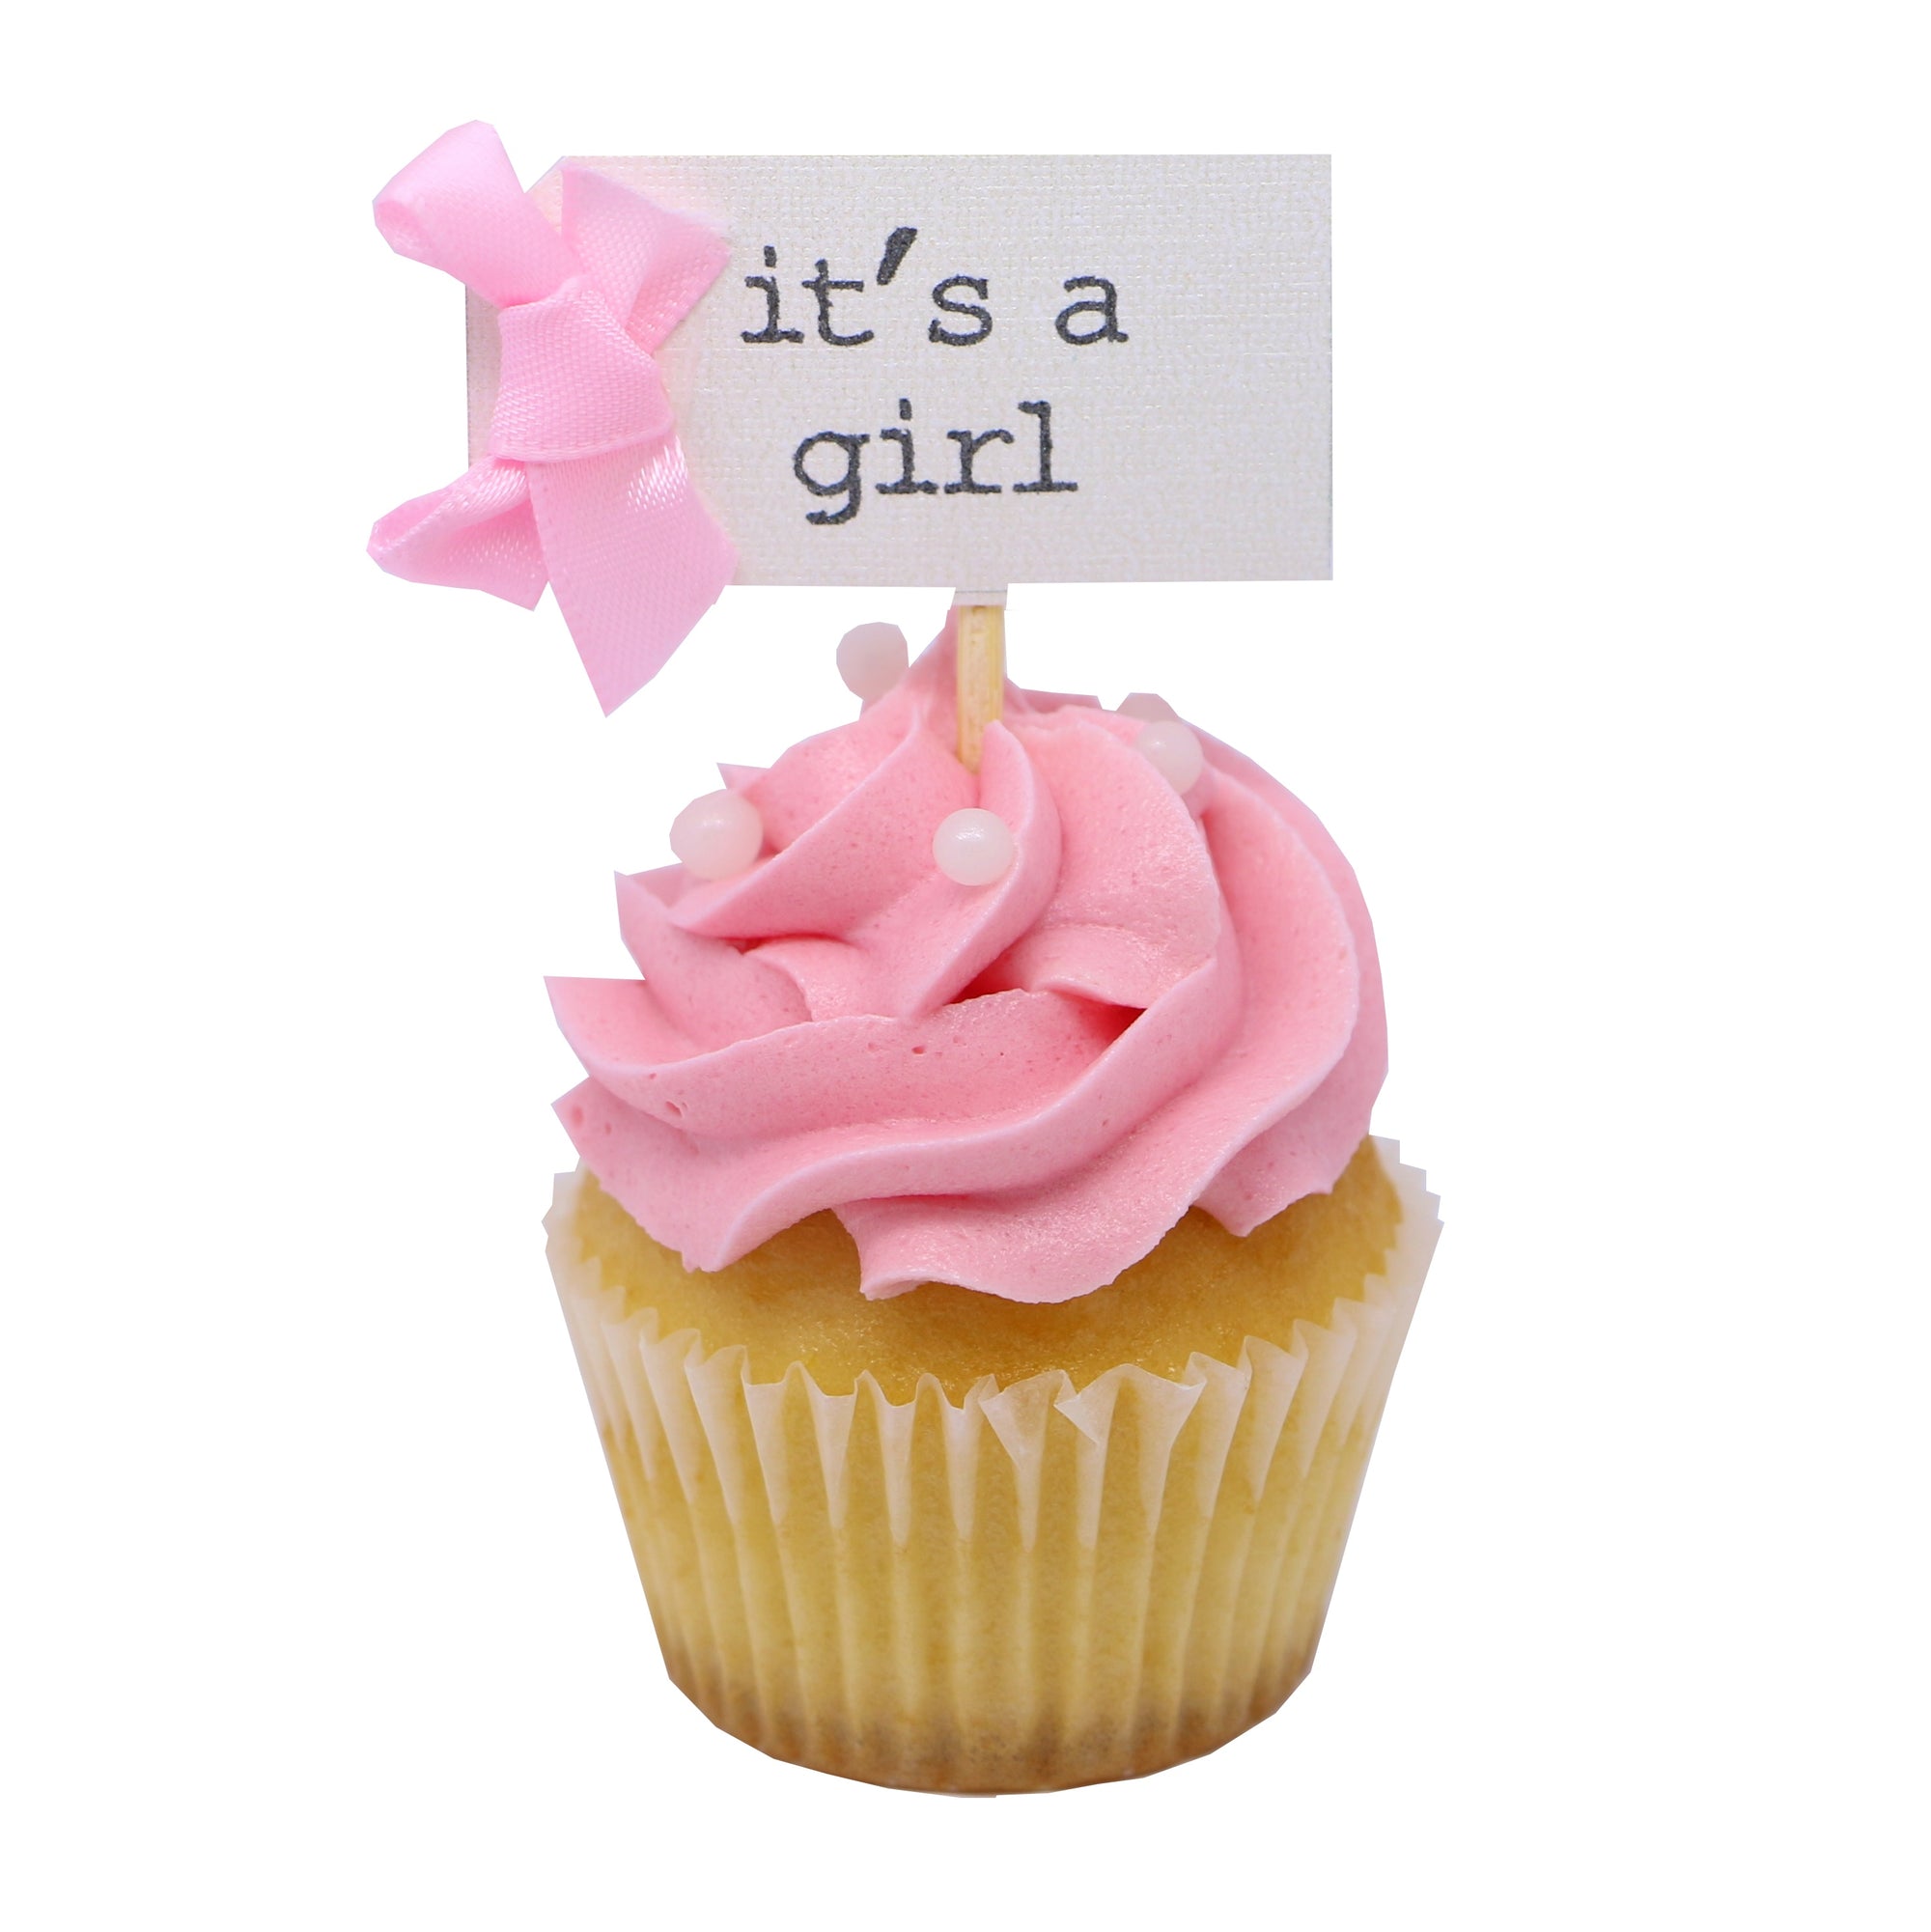 Mini Cupcake - It's a Girl - Treats2eat - Wedding & Birthday Party Dessert Catering Near Me